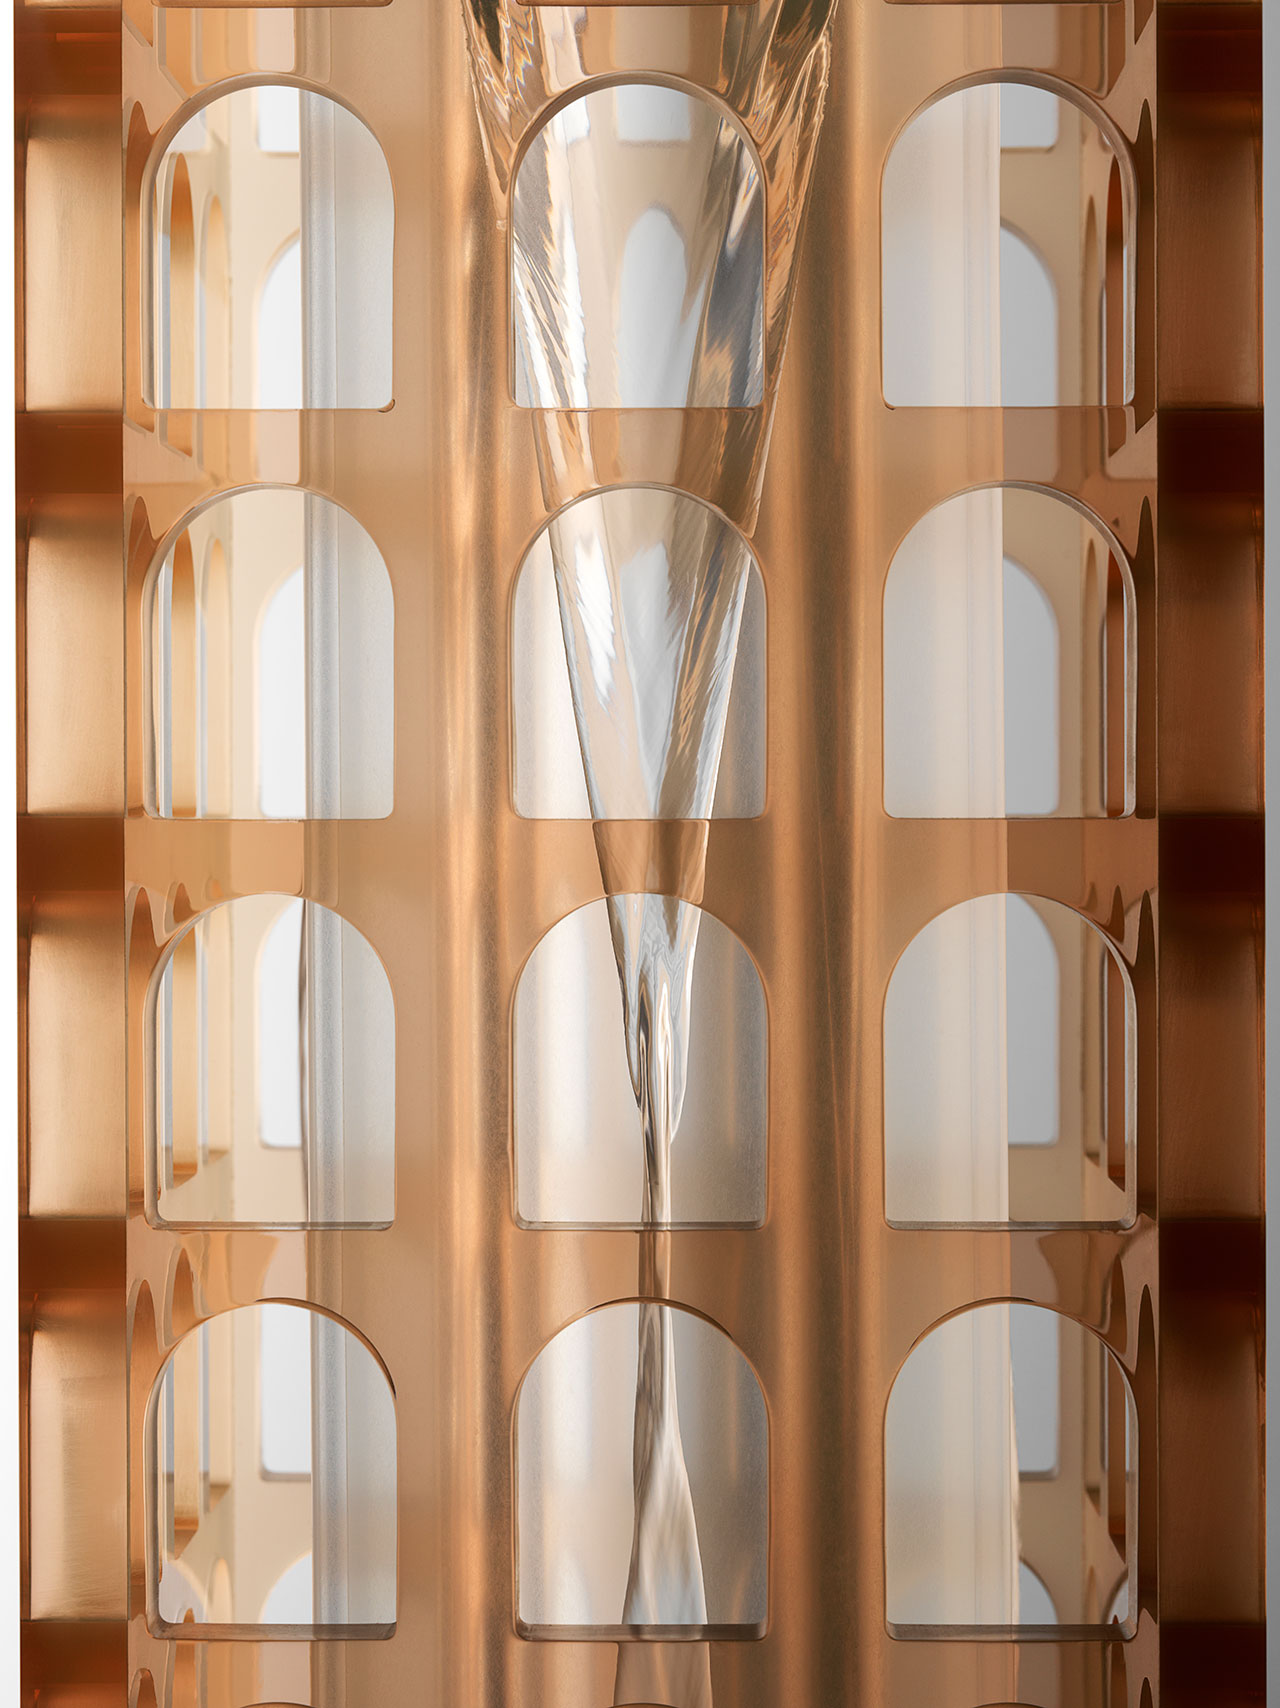 Sabine Marcelis，Palazzo della Civiltà Italiana（细节），2018 年。出自 FENDI 为庆祝其参与迈阿密设计十周年而委托制作的水的形状系列。 照片由卡尔·克莱纳 (Carl Kleiner) 提供，由 FENDI 提供。